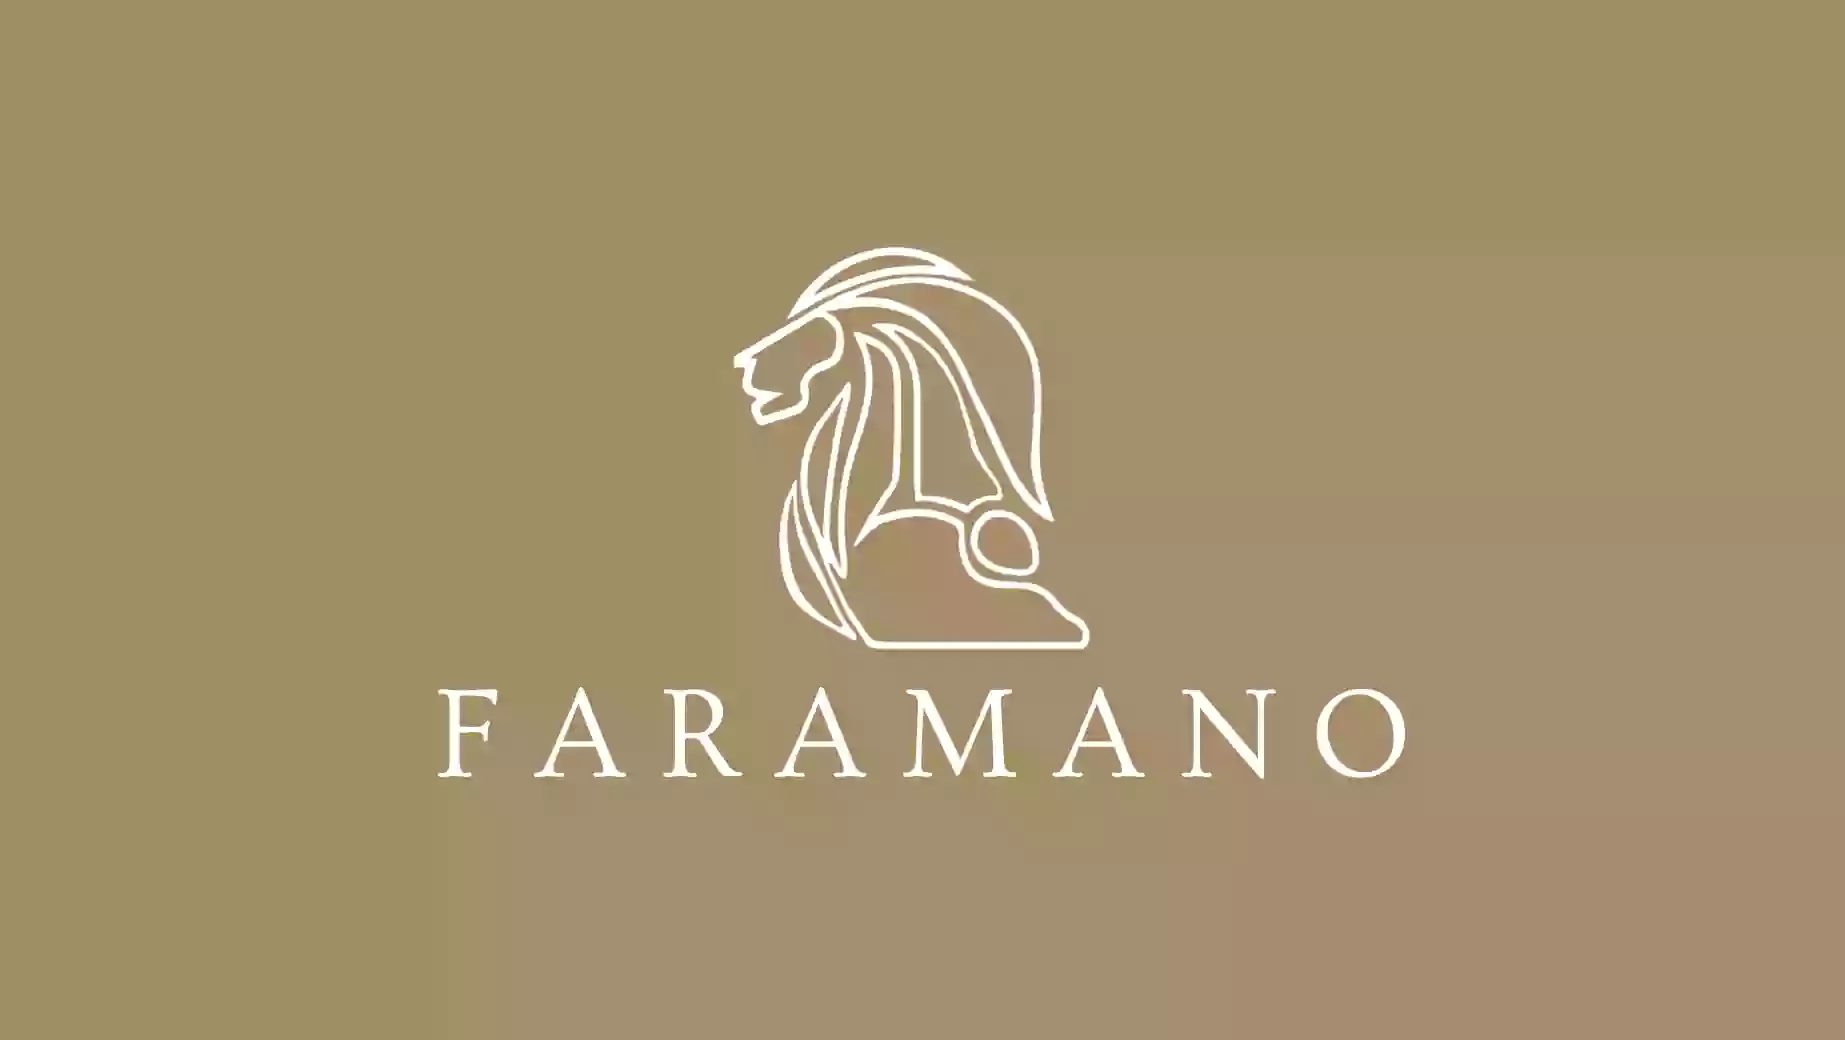 Faramano by David Silva